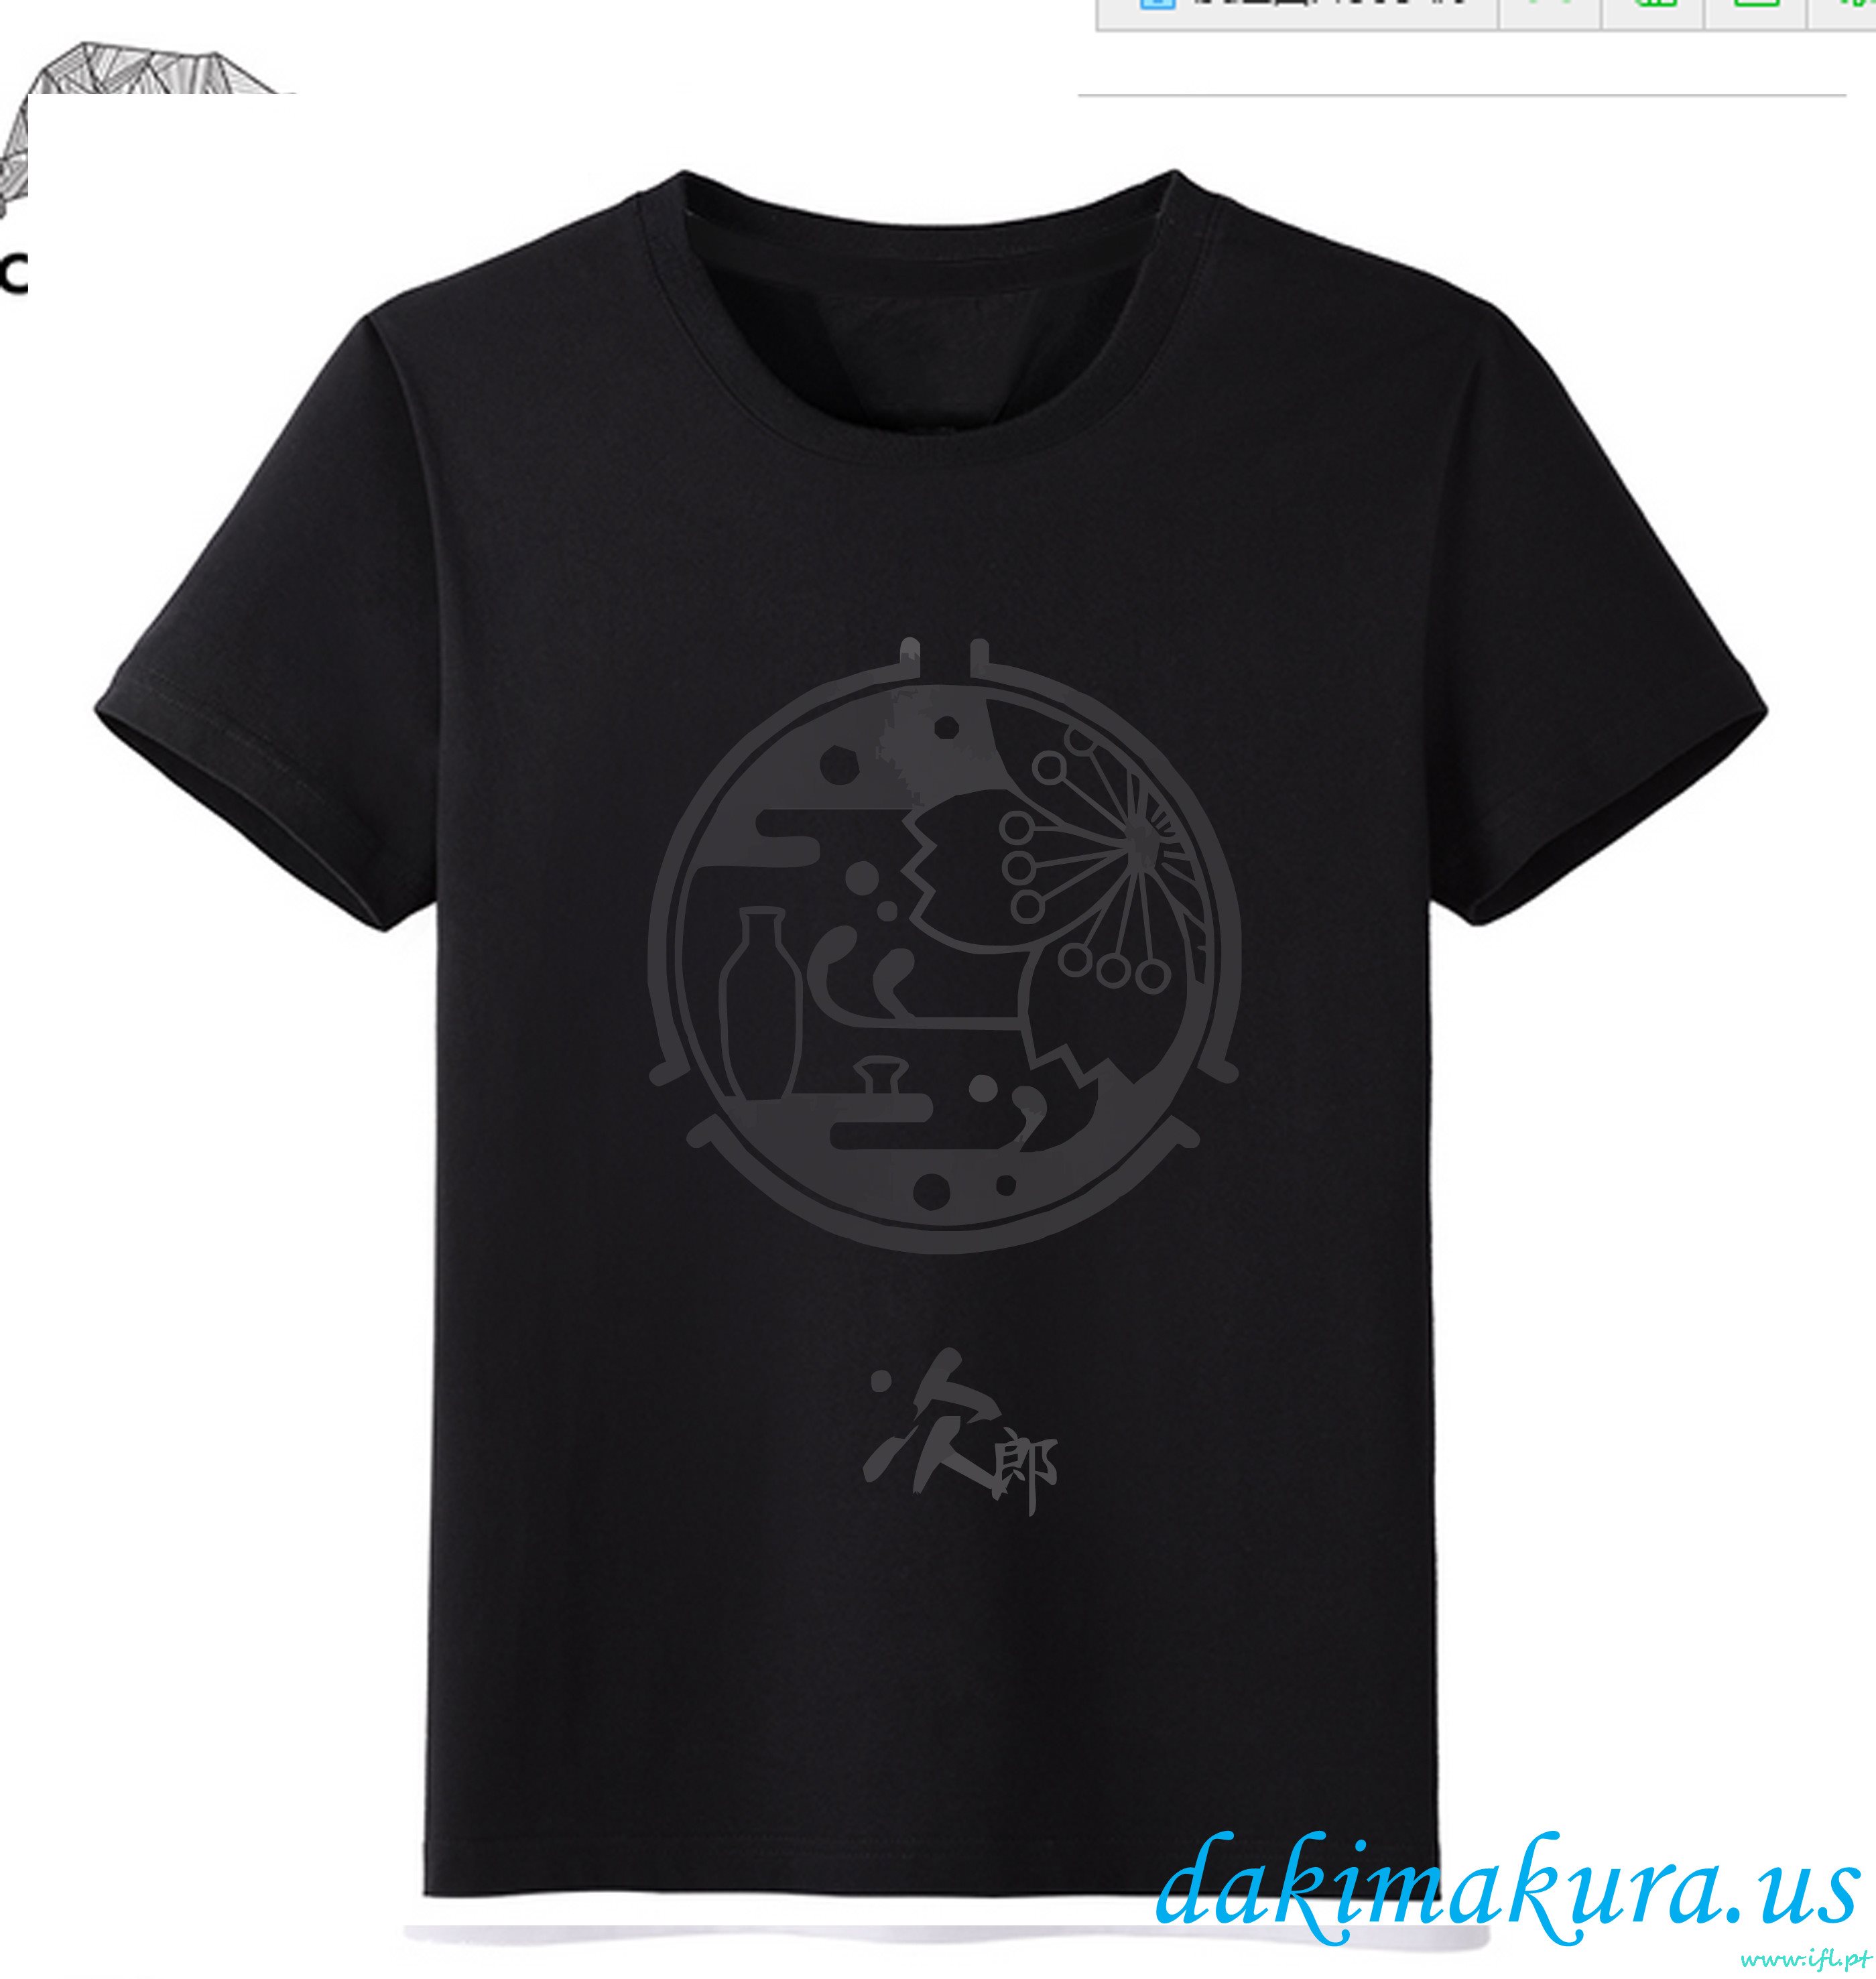 Goedkope Zwarte - Touken Ranbu Online Mannen Anime Maniert-shirts Van De Fabriek Van China